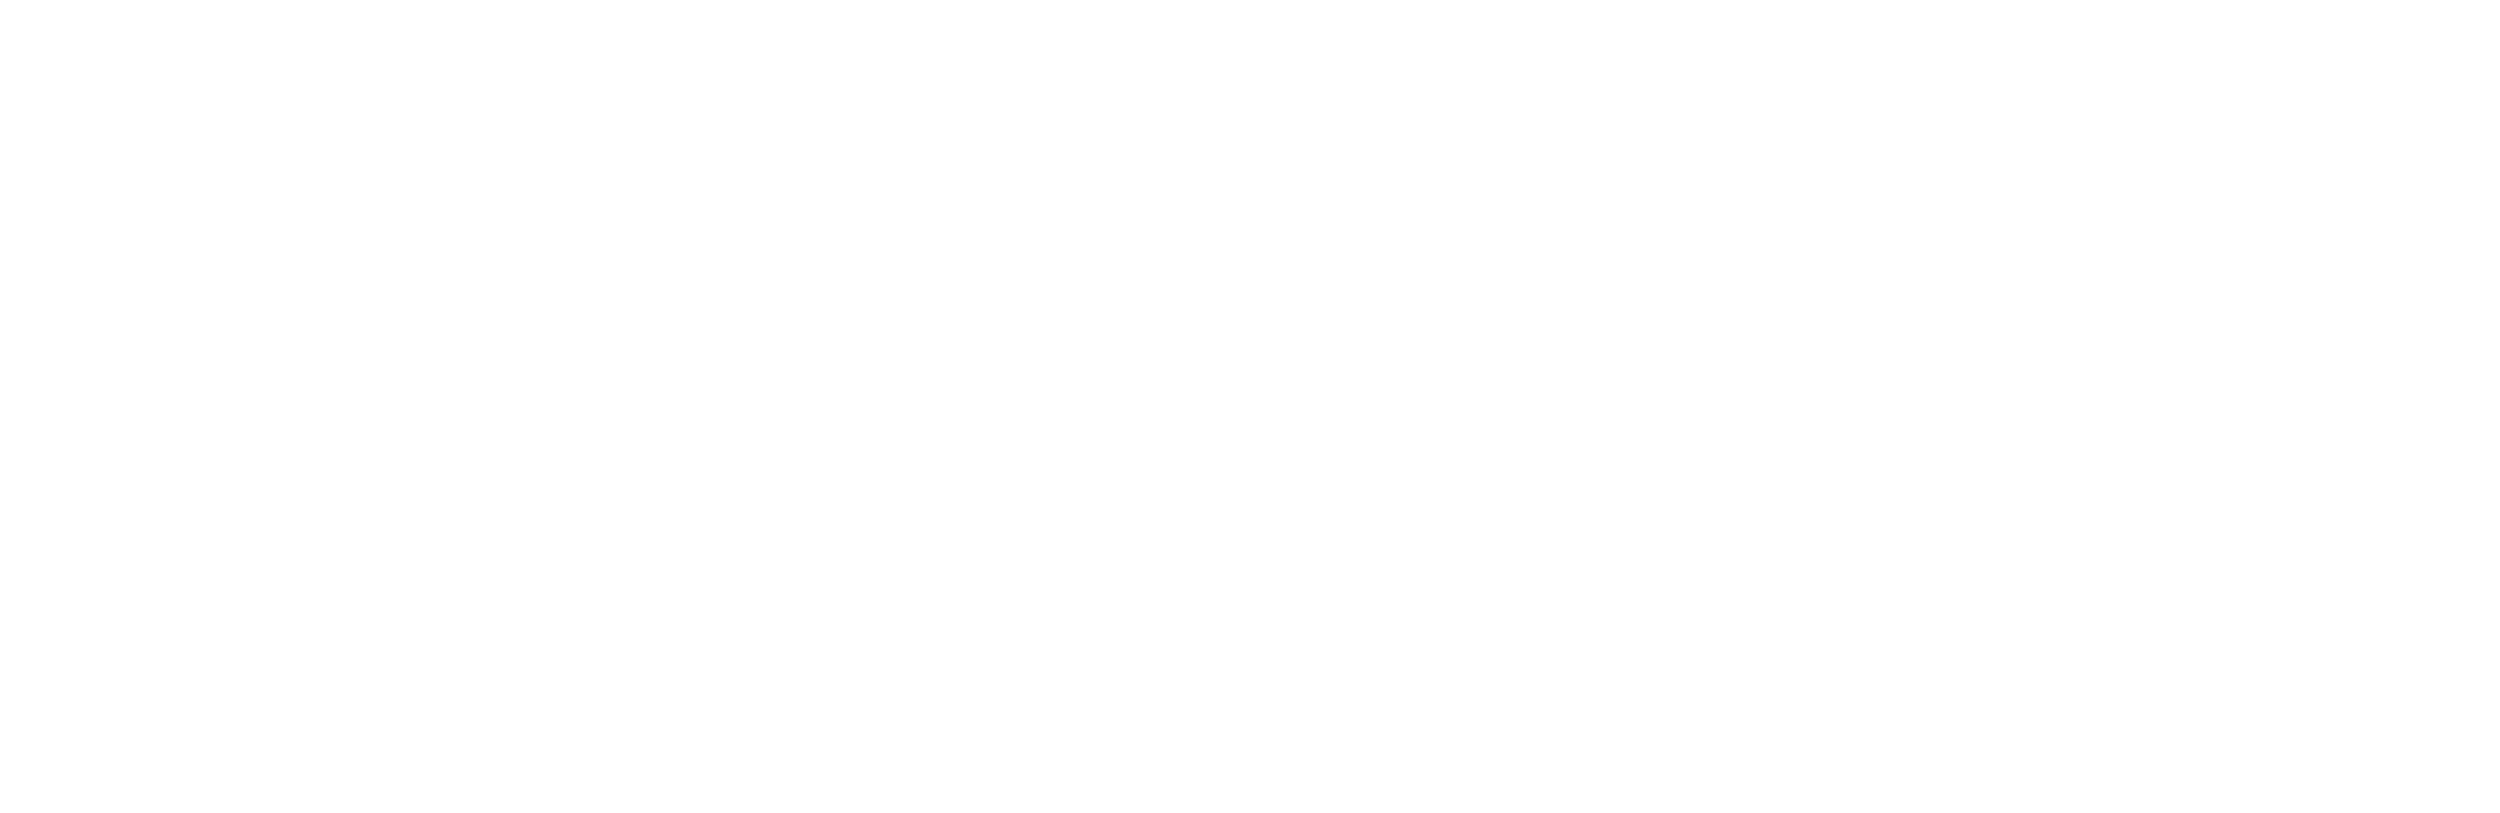 Manurewa Fun Run